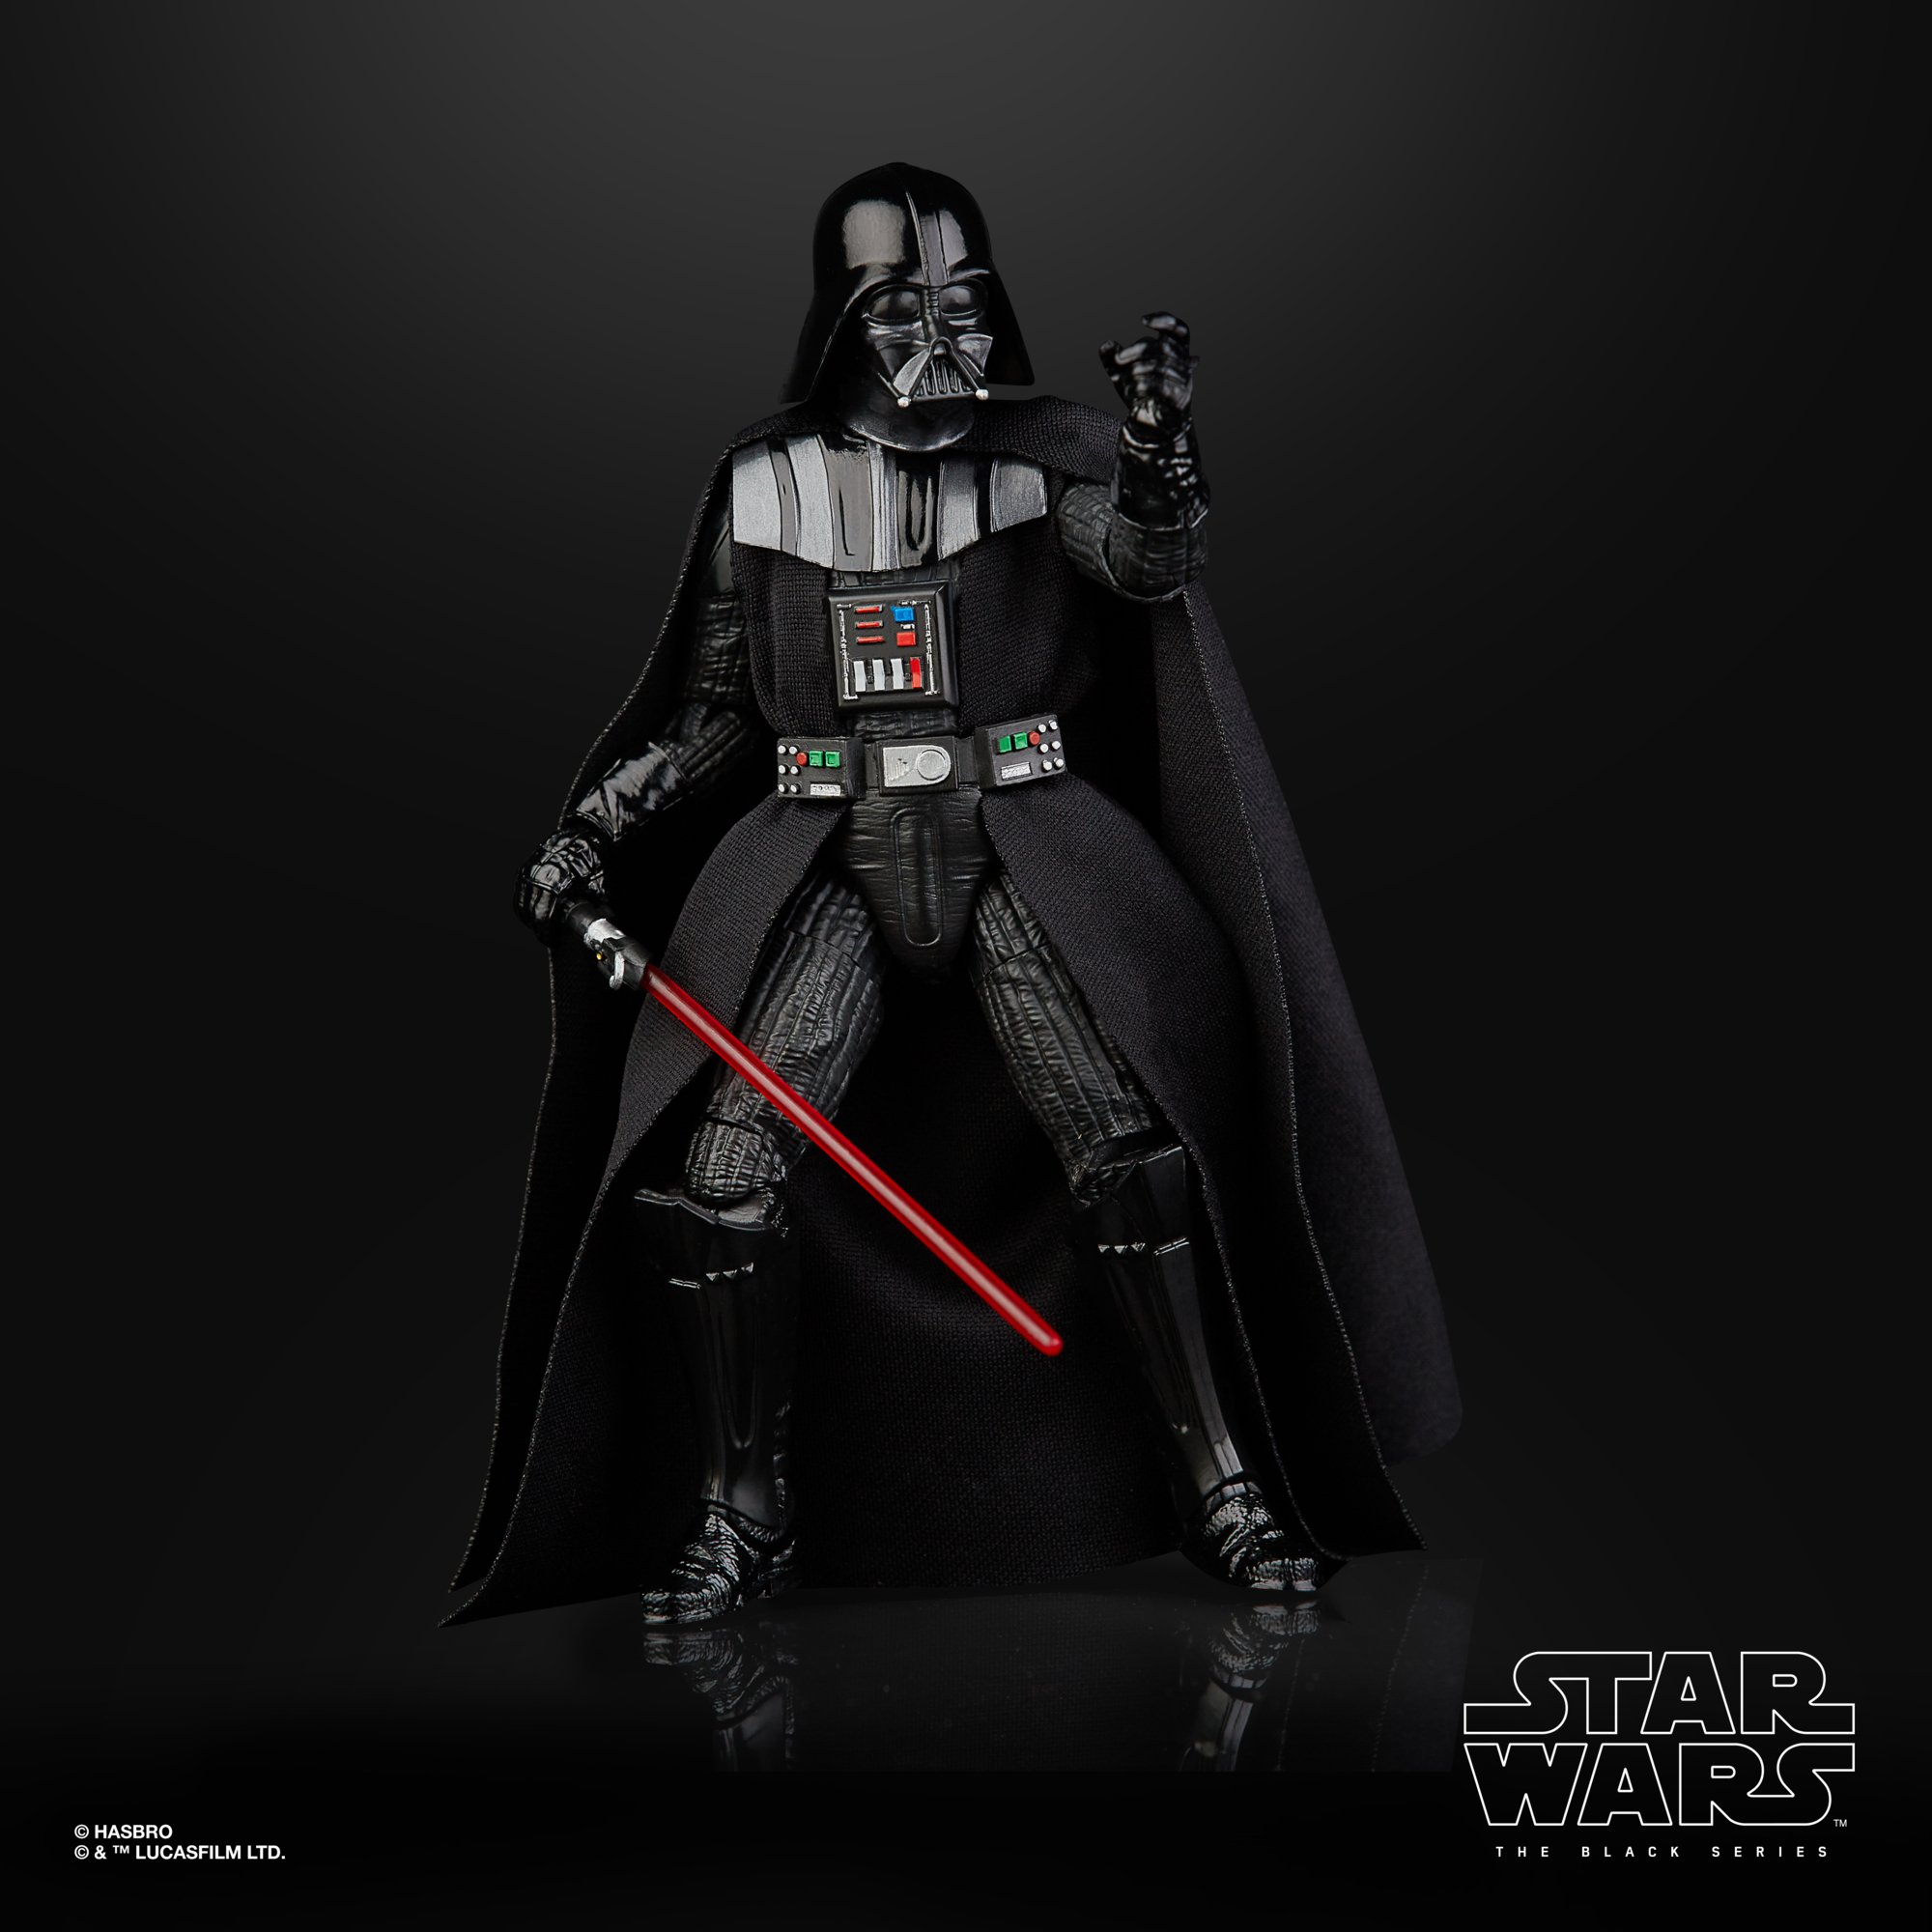 Star Wars 6" Black Series Action Figure Gift Darth Vader Boba Fett Stormtrooper 